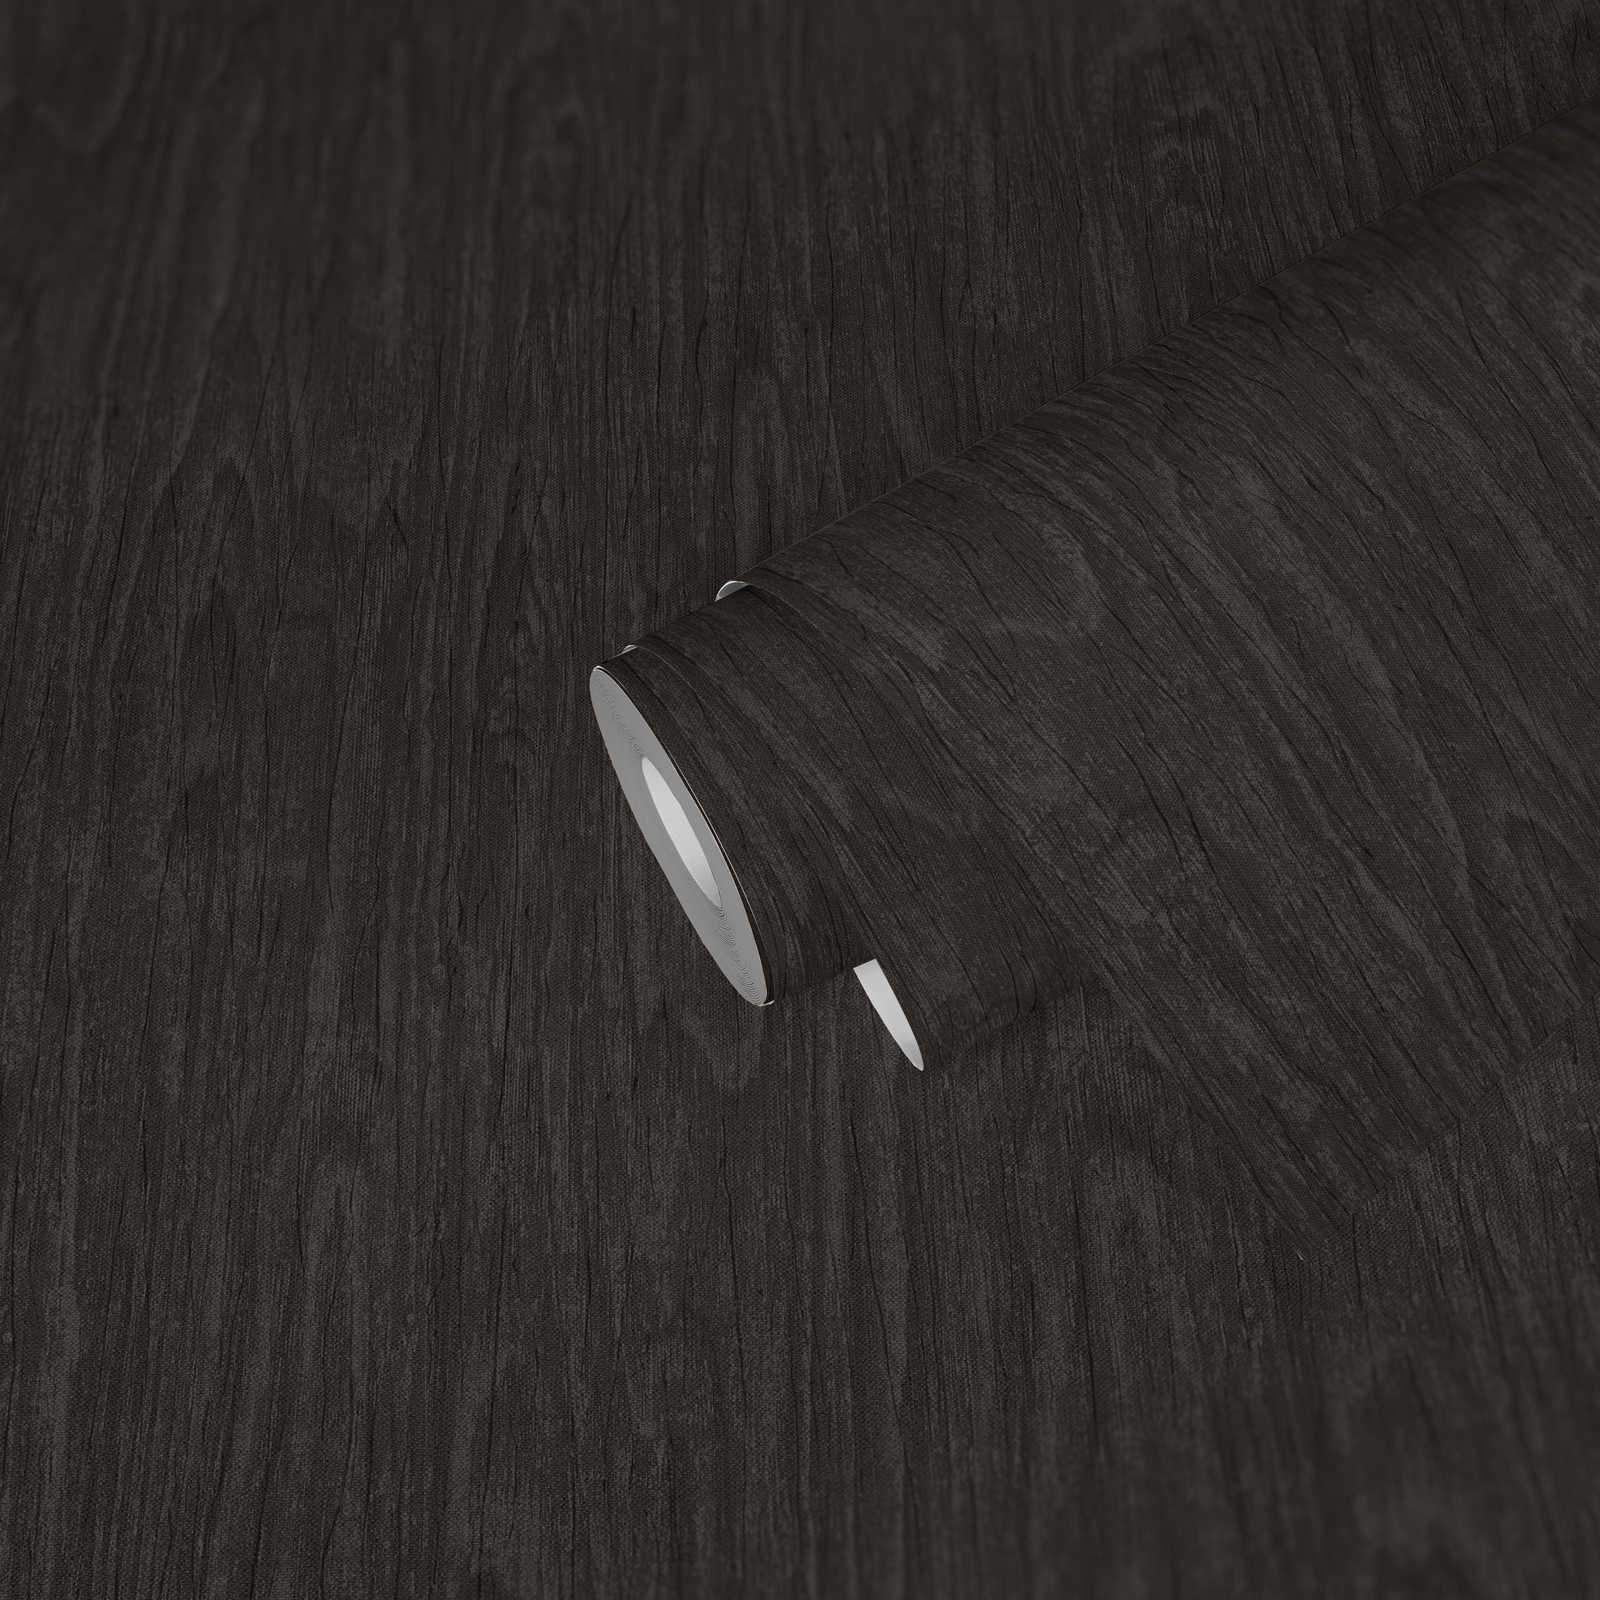             Papel pintado VERSACE Home aspecto madera realista - gris, negro
        